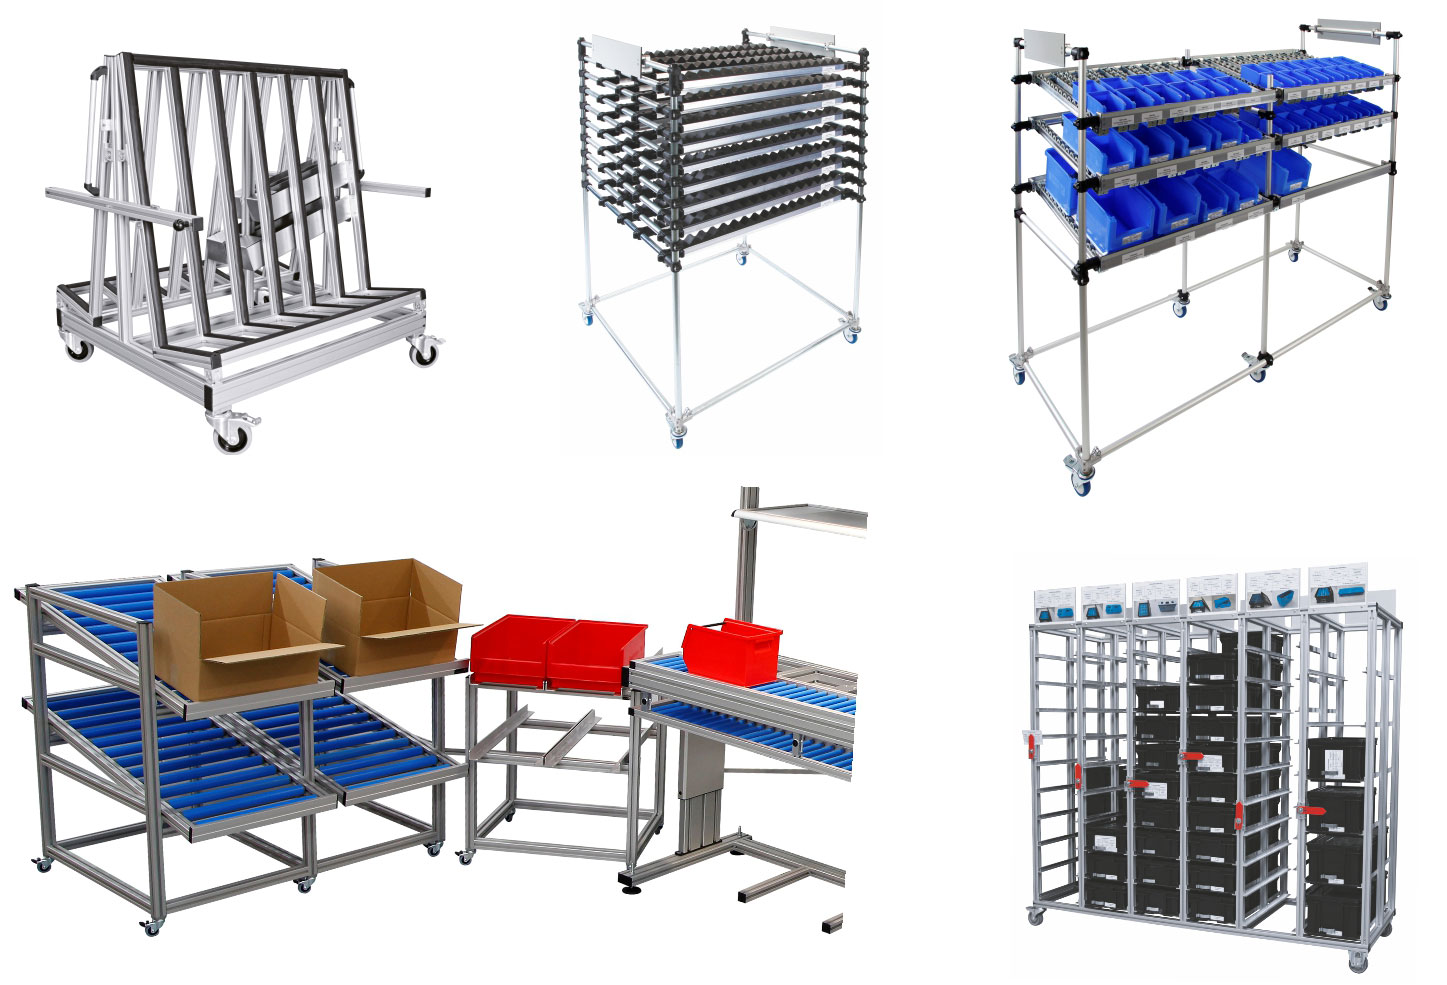 Examples for assembly / storage / transportation frames